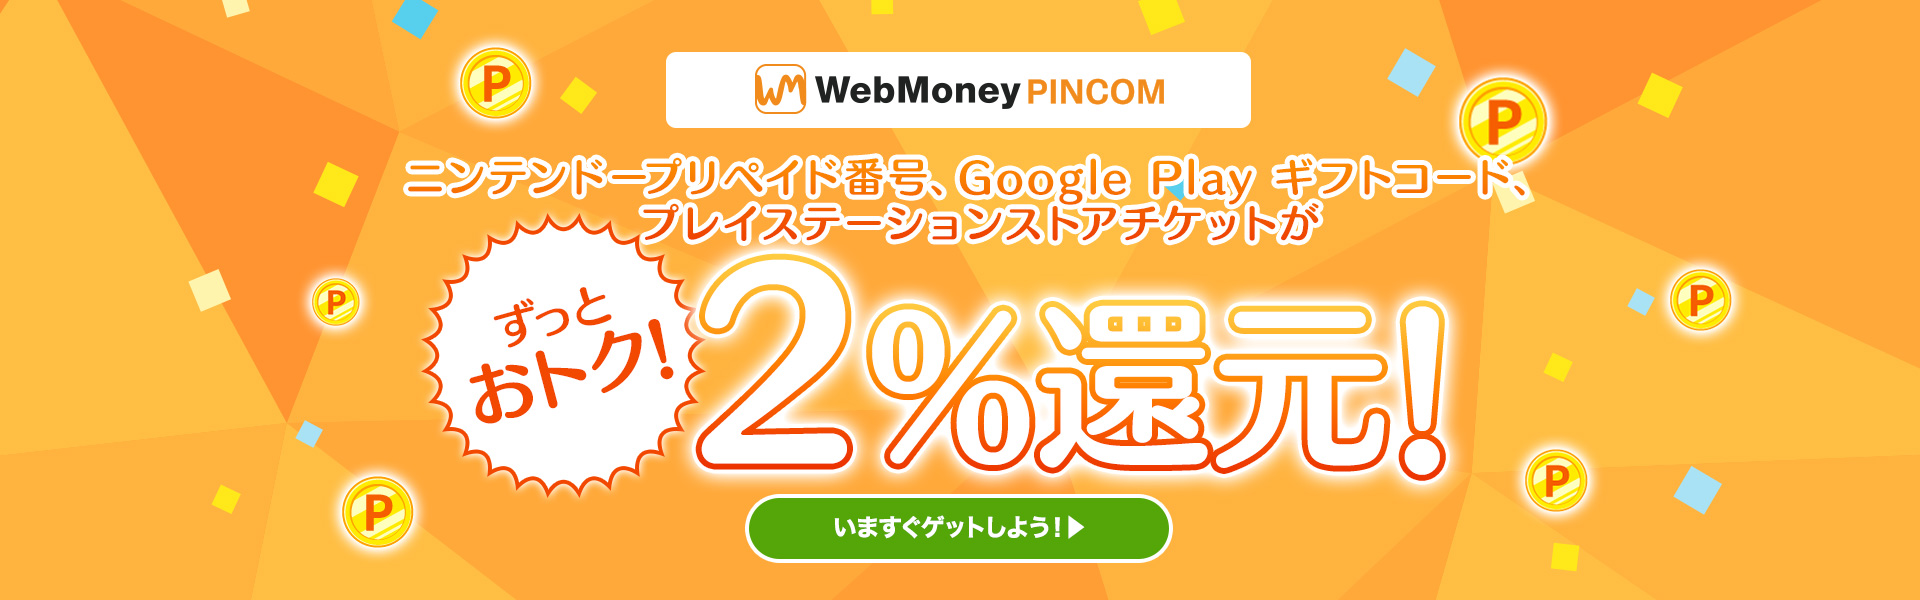 『WebMoney PINCOM』ニンテンドープリペイド番号、Google Play ギフトコード、プレイステーションストアチケットがずっと2%還元！